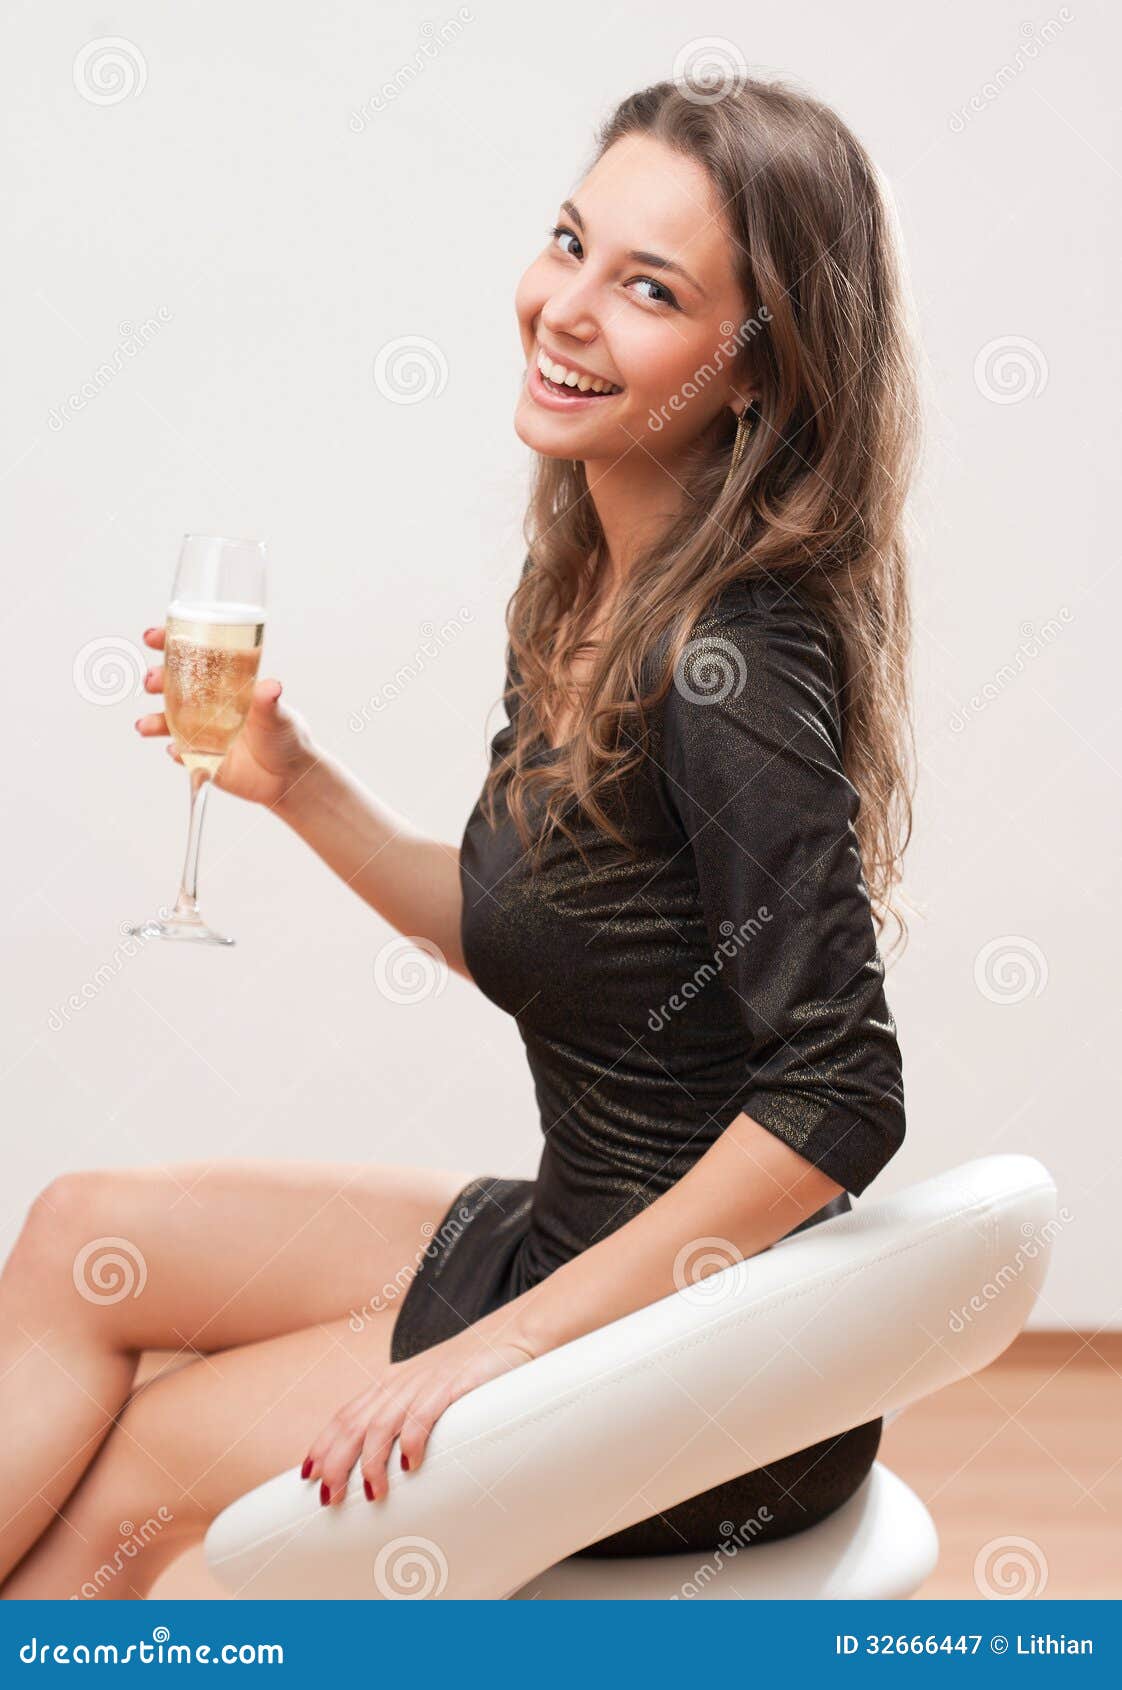 girl sitting on stool Nude bar